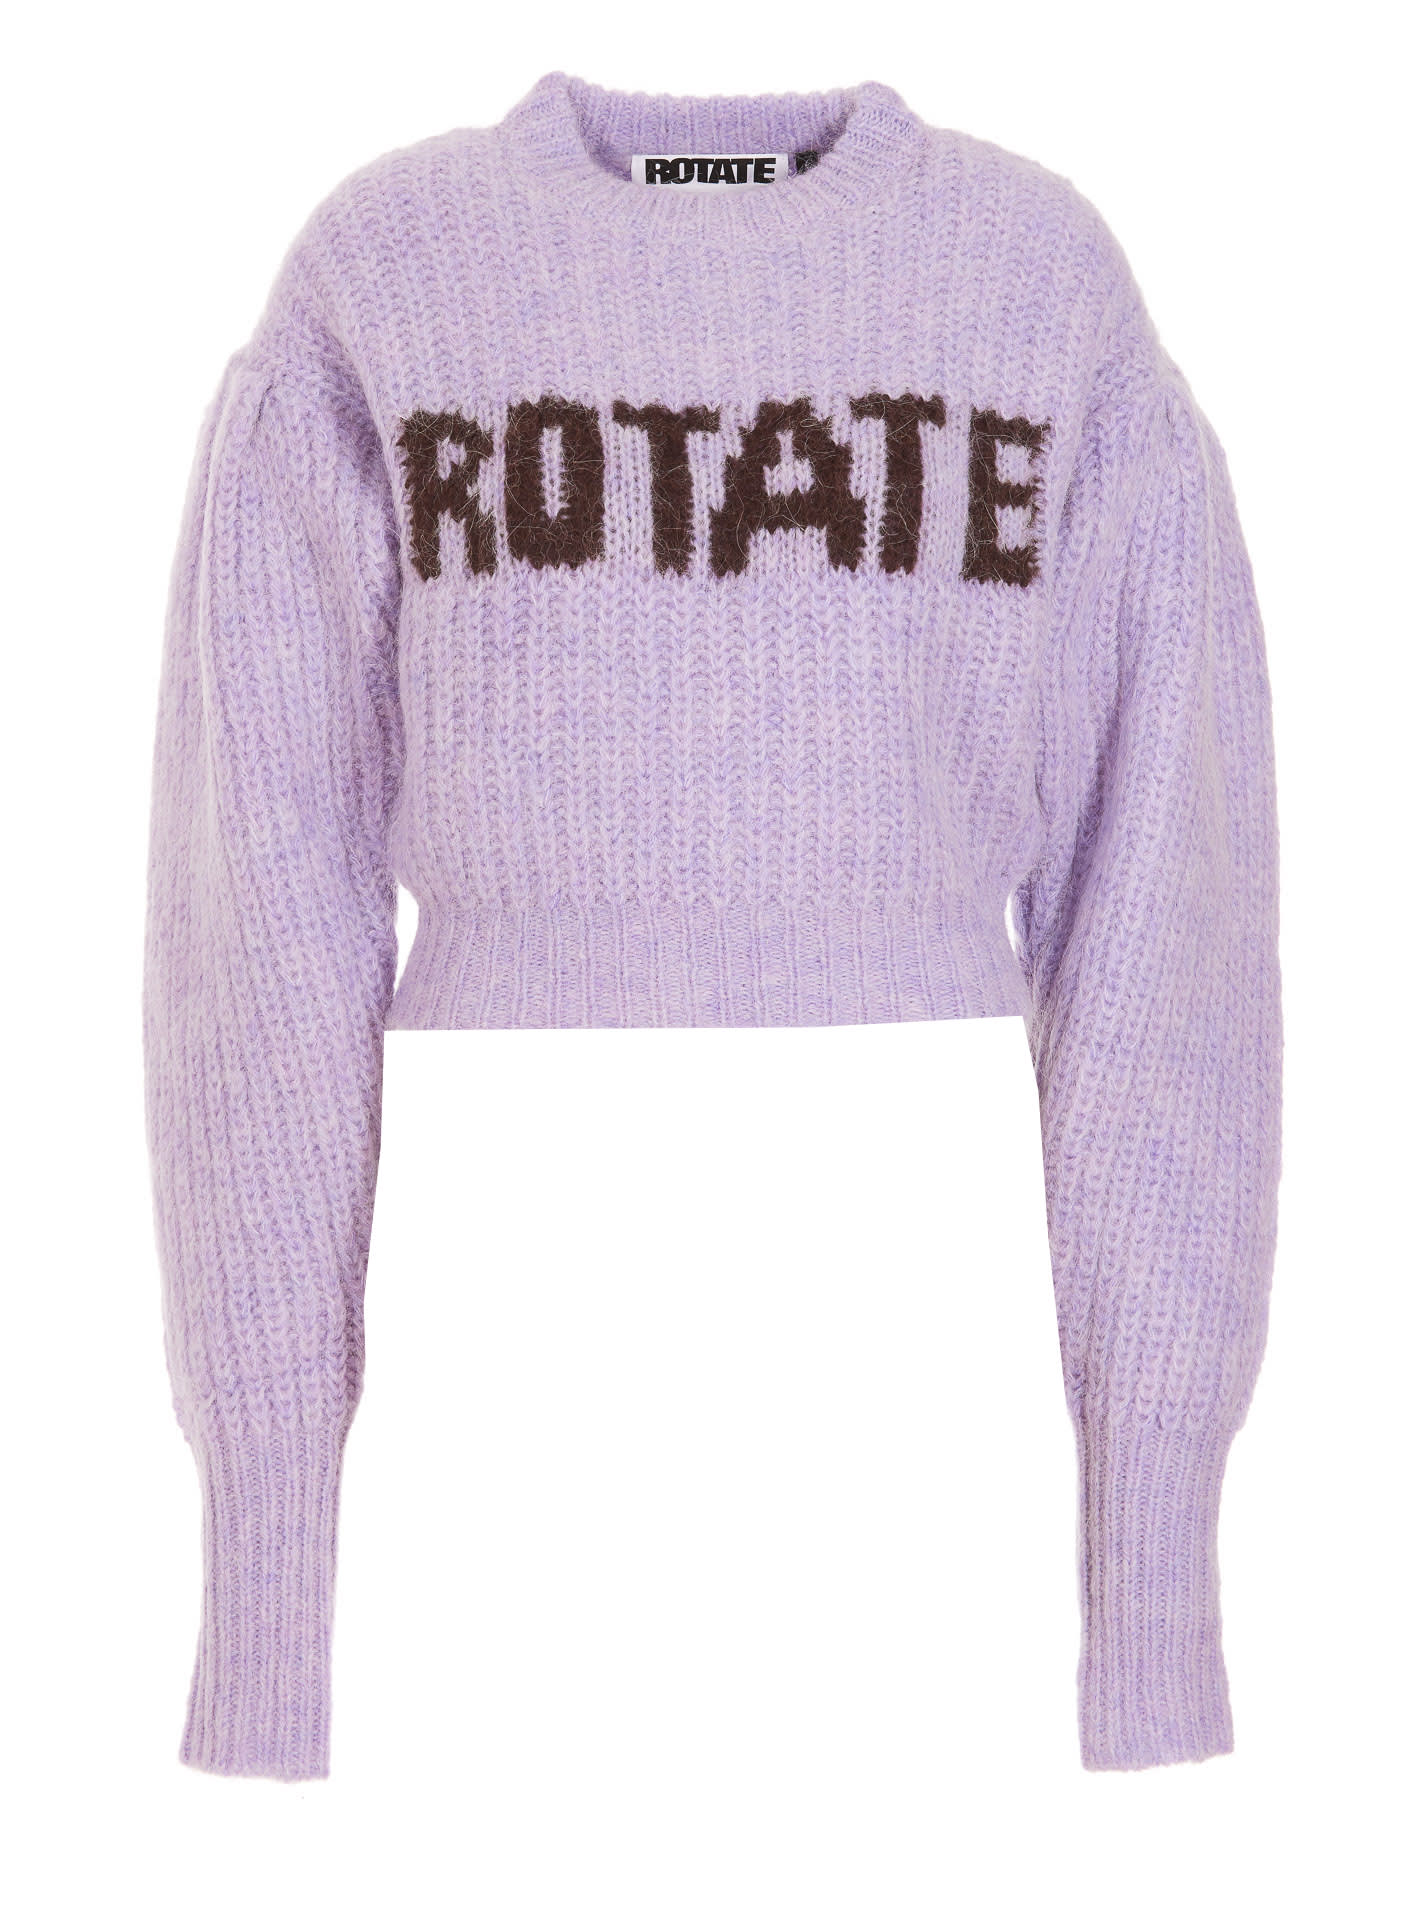 Rotate by Birger Christensen Adley Logo Sweater